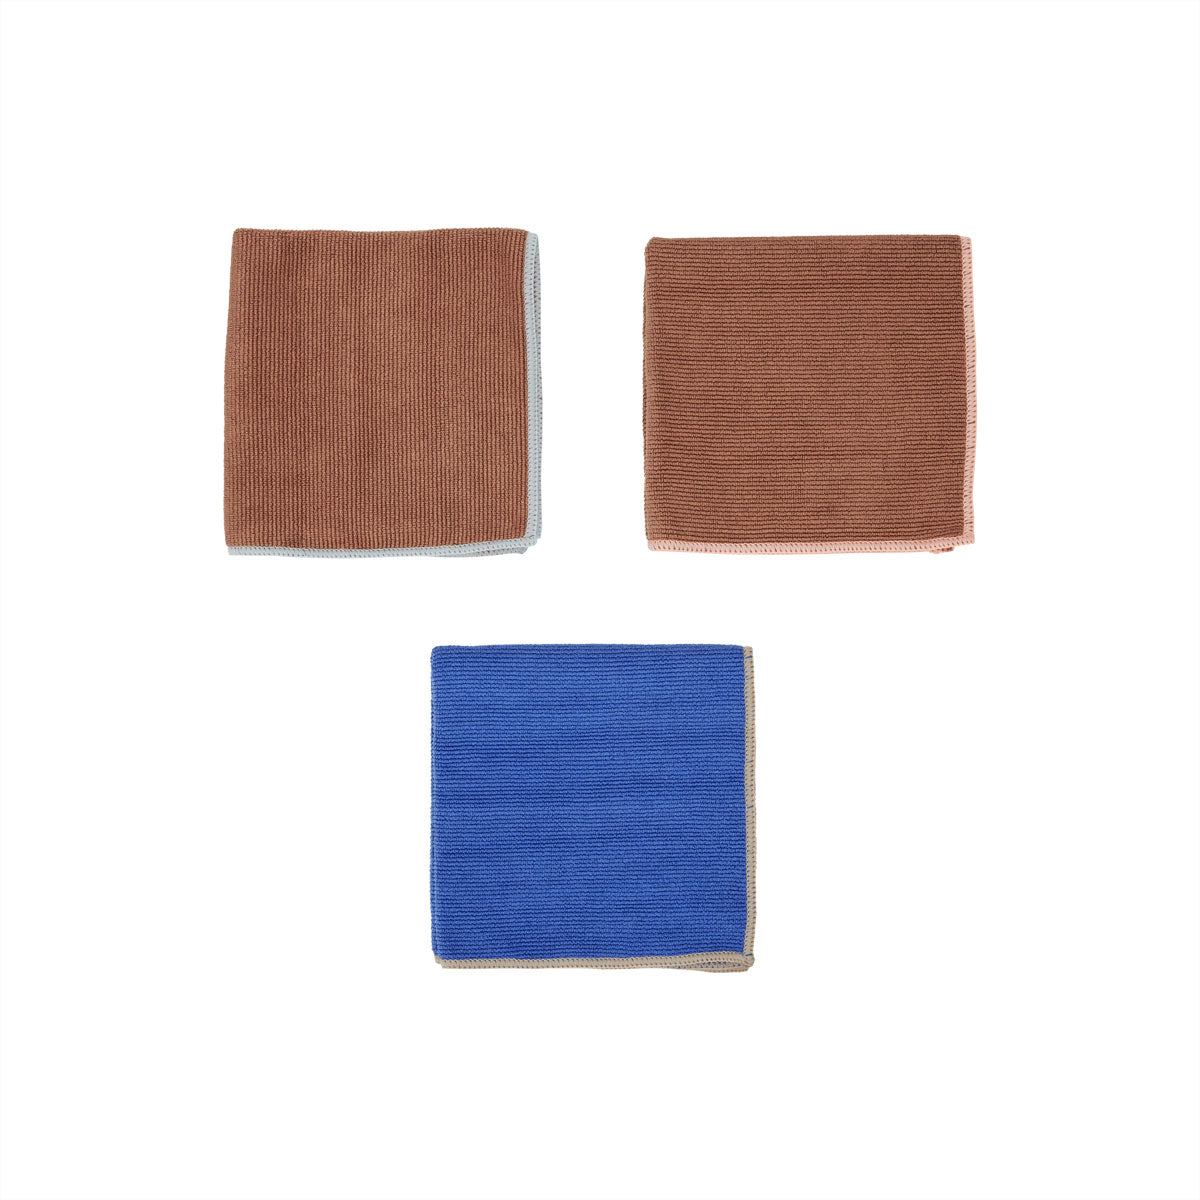 OYOY LIVING Mundus Microfiber Dish Cloth - Pack of 3 Dish Cloth 301 Brown / Clay